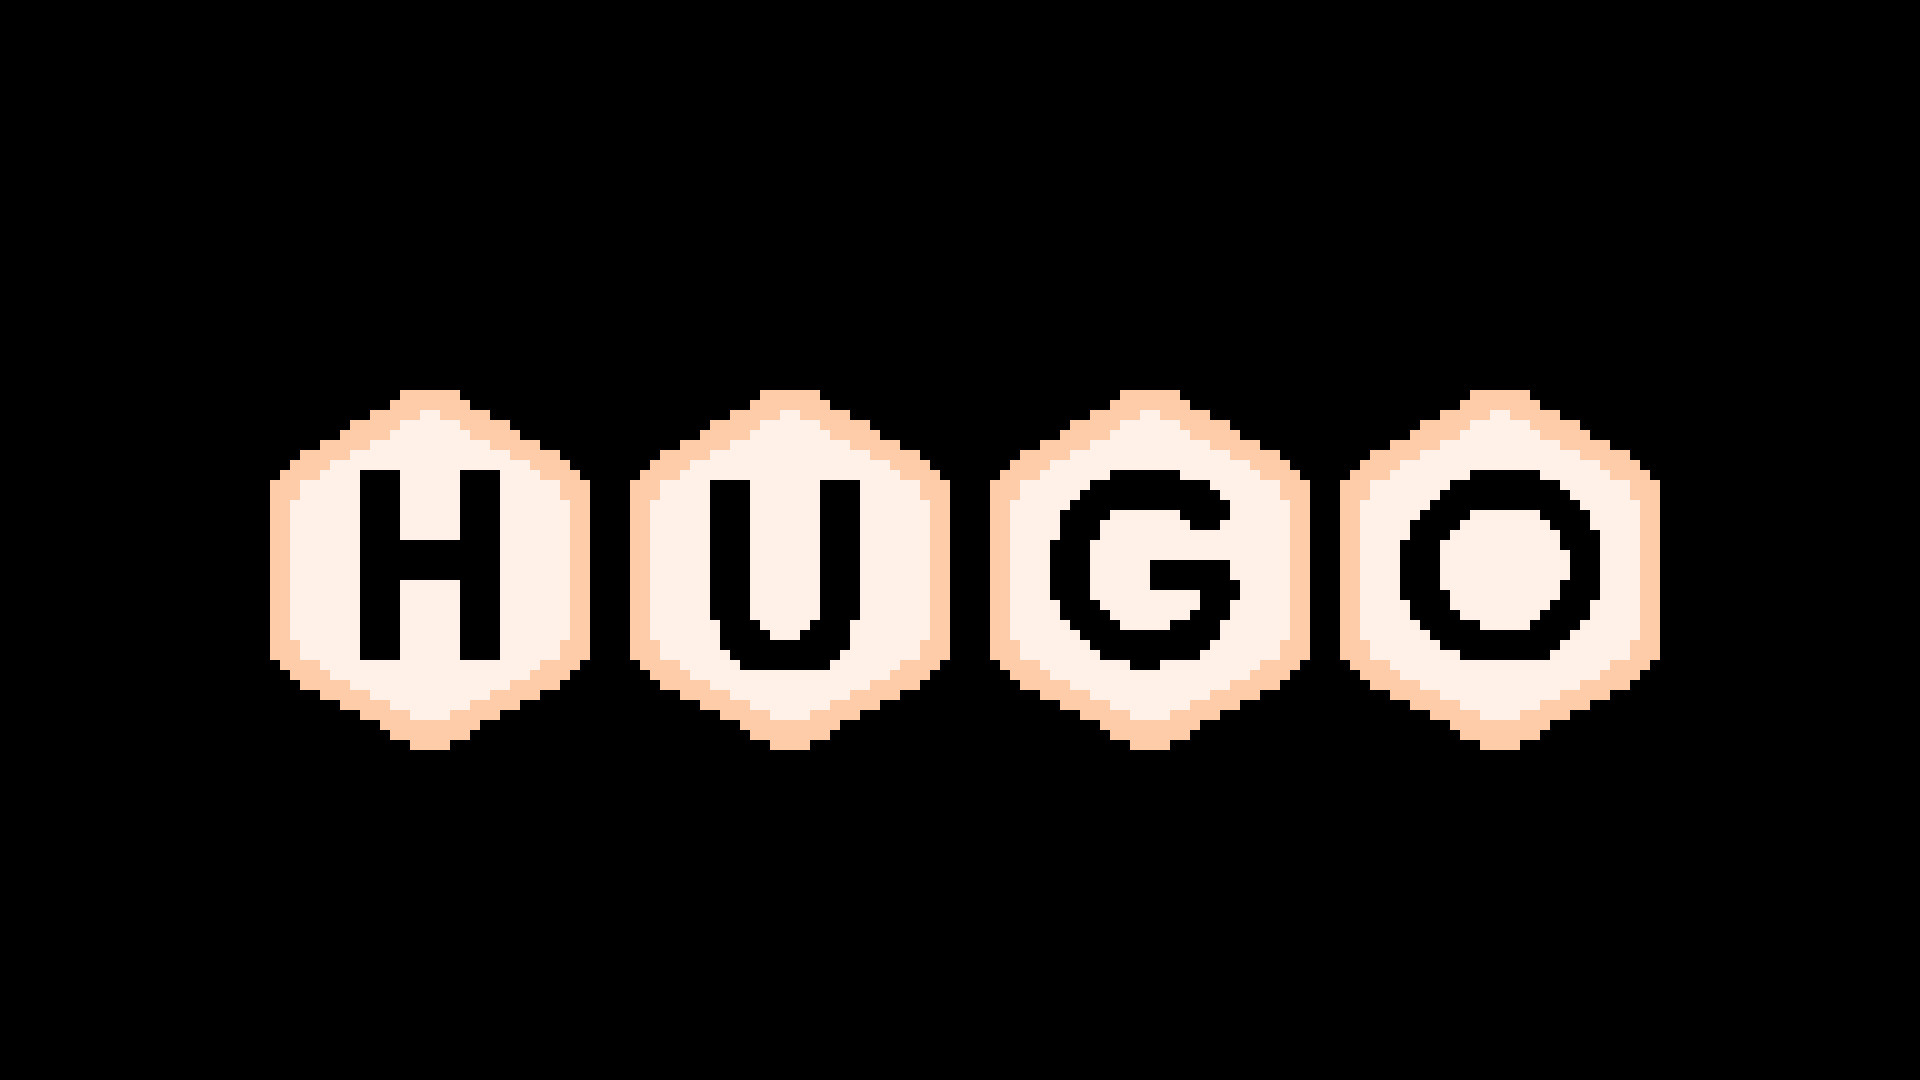 HUGO Logo